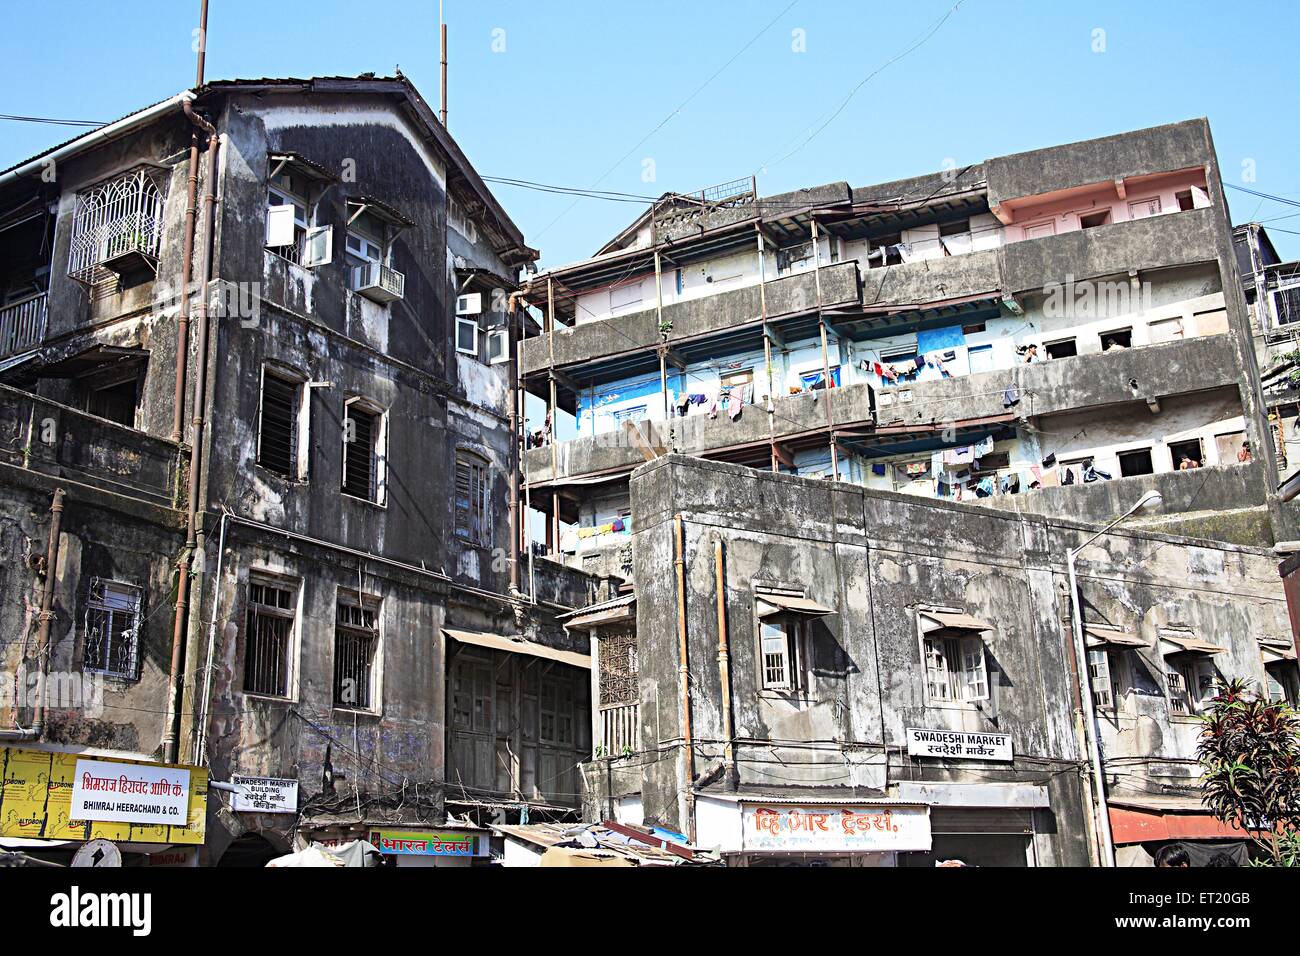 Old Building ; Swadeshi Market ; Dr. Viegas Street ; Kalbadevi ; Marine Lines ; Bombay ; Mumbai ; Maharashtra ; India ; Asia ; Asian ; Indian Stock Photo